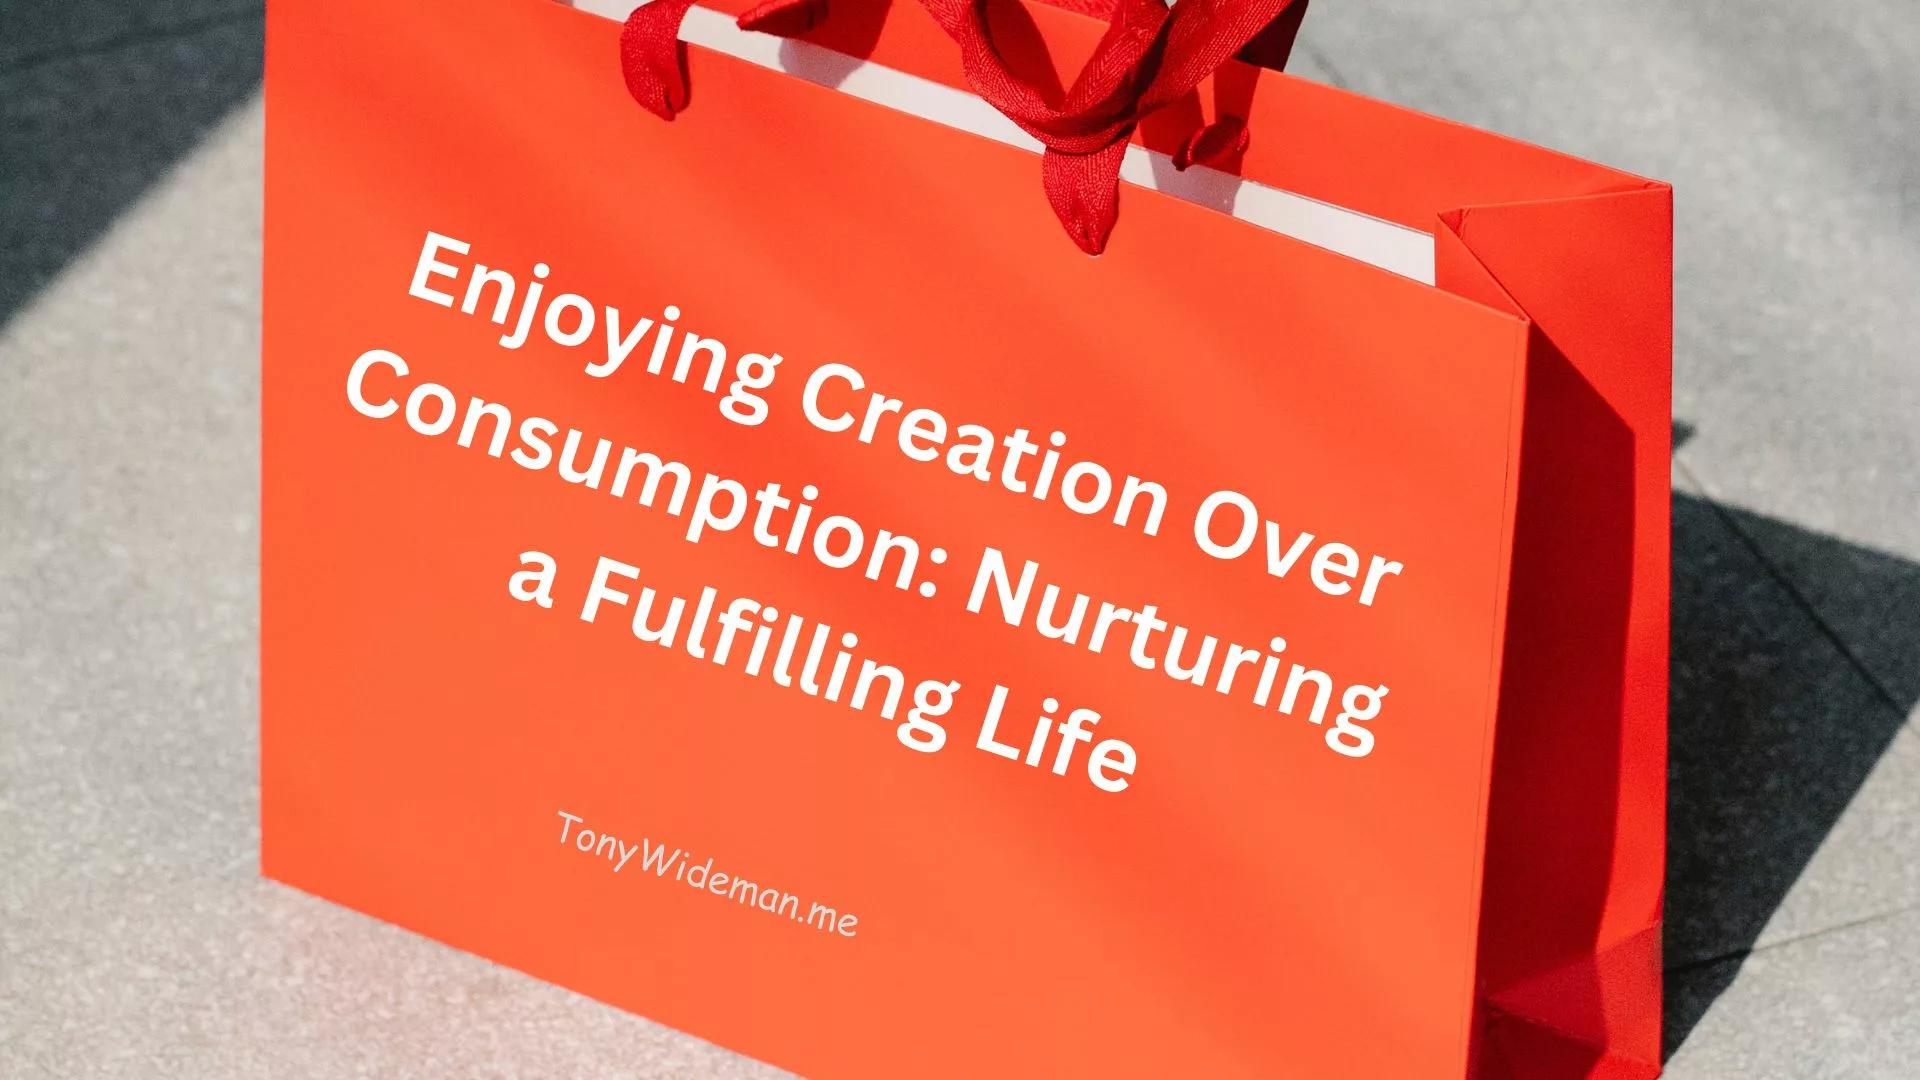 Enjoying Creation Over Consumption: Nurturing a Fulfilling Life